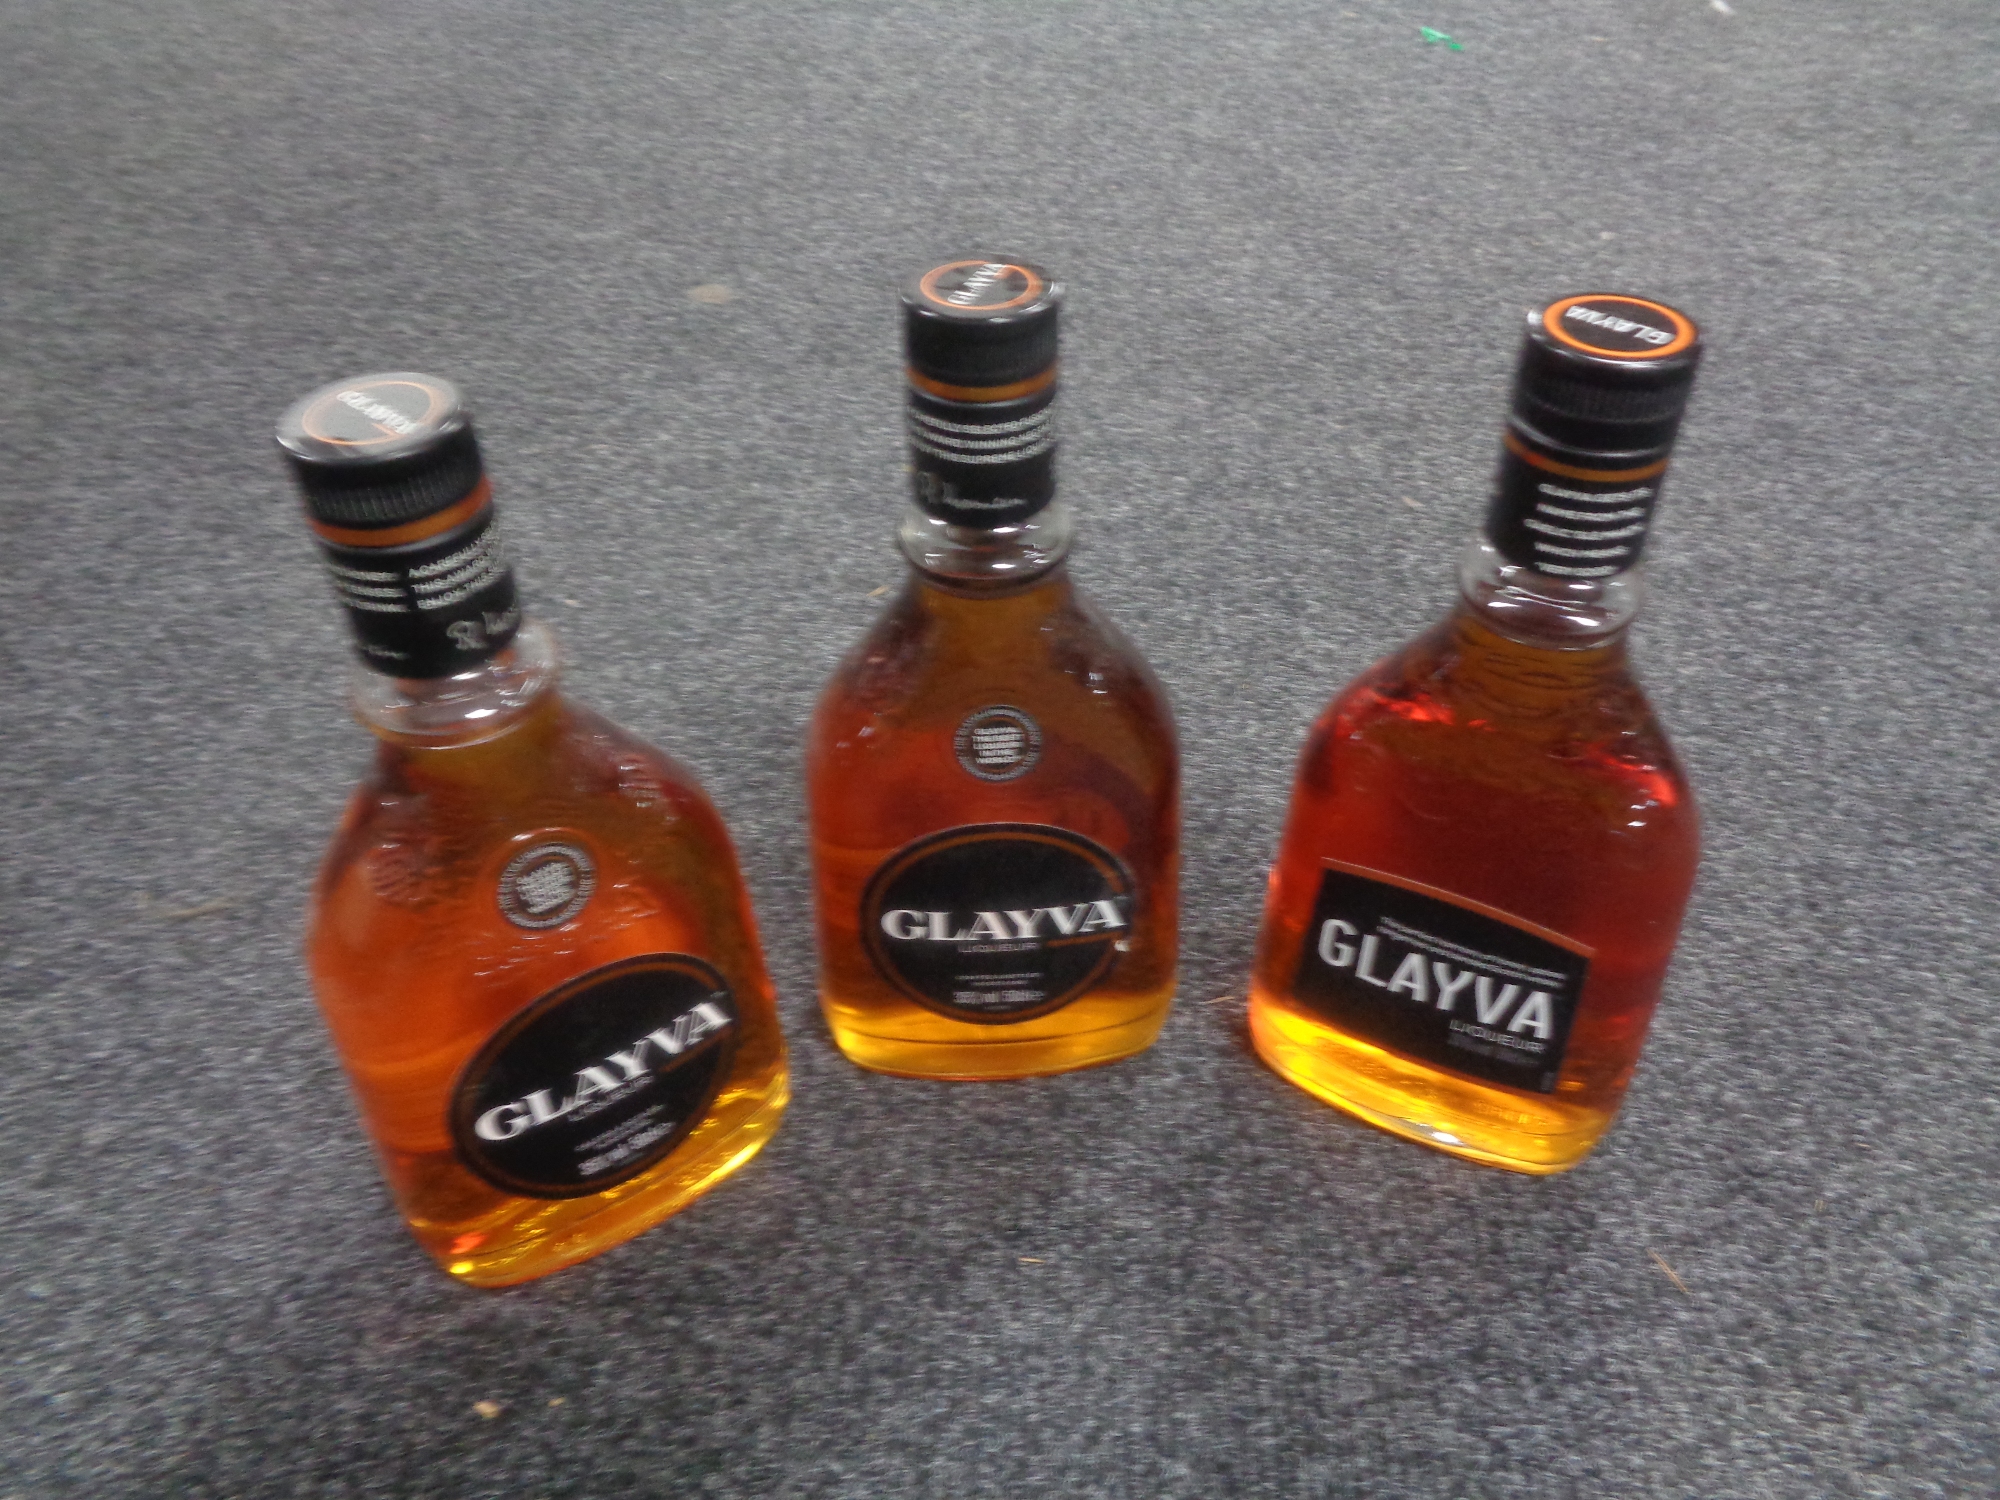 Three bottles of Glayva liqueur, 50cl.